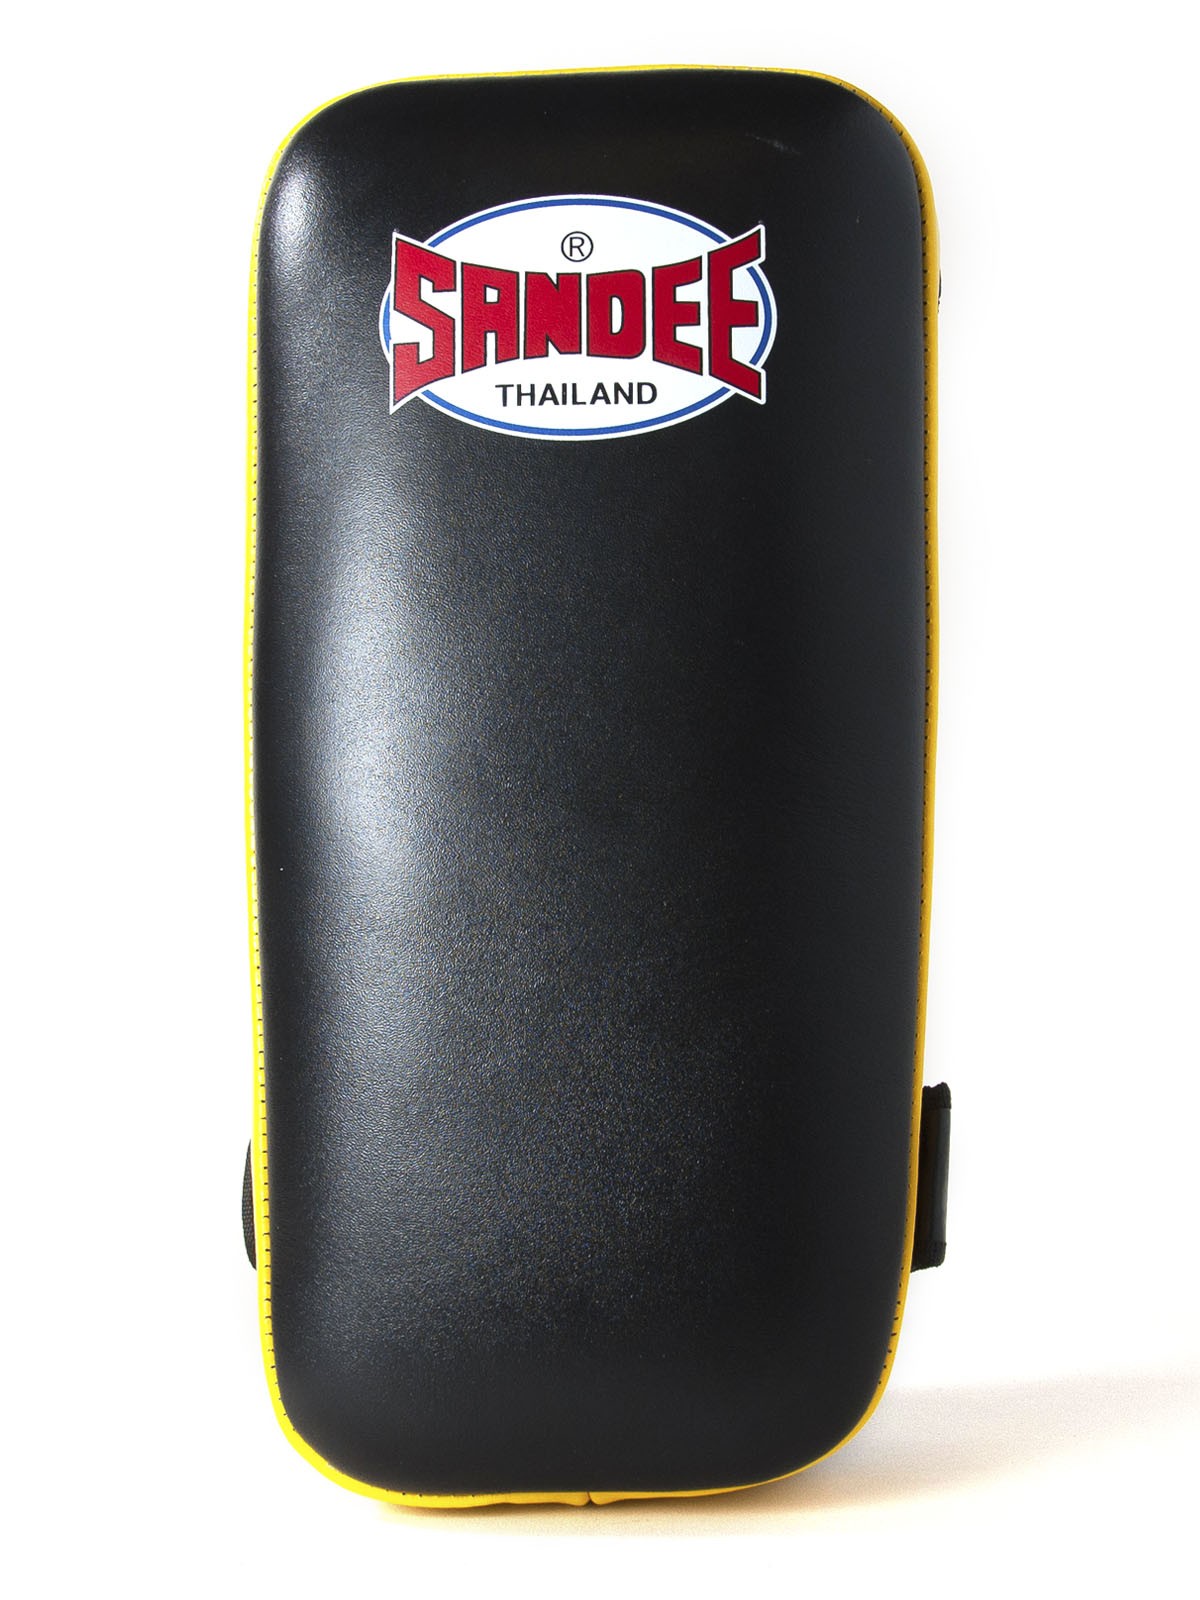 Sandee Black & White Curved Thai Leather Kick Pads Boxing Training MMA Muay Thai 